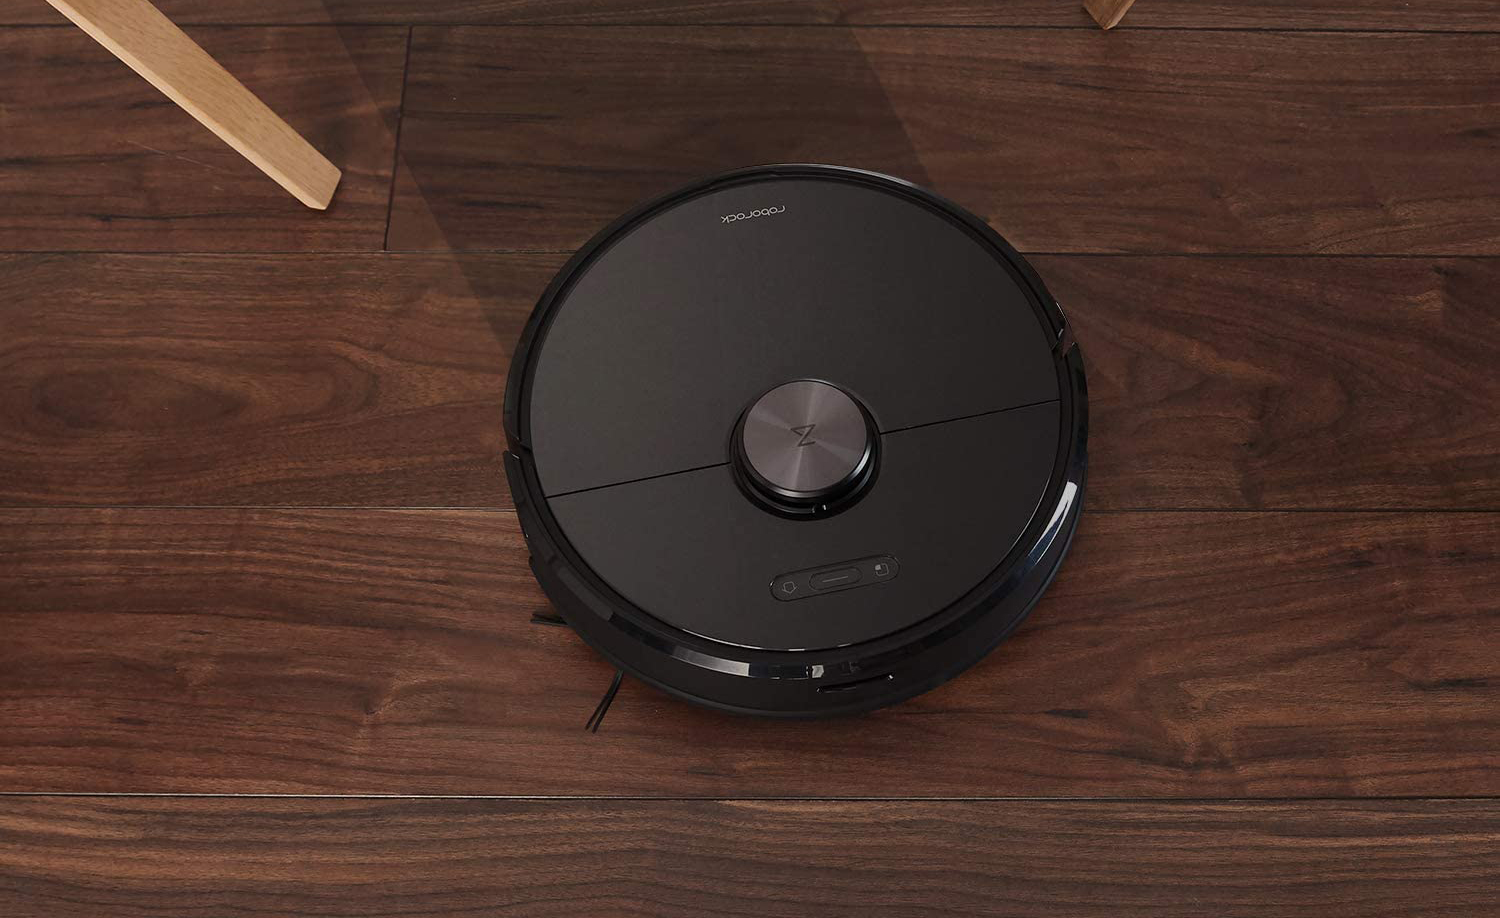 Best Robot Vacuum for Carpet Options